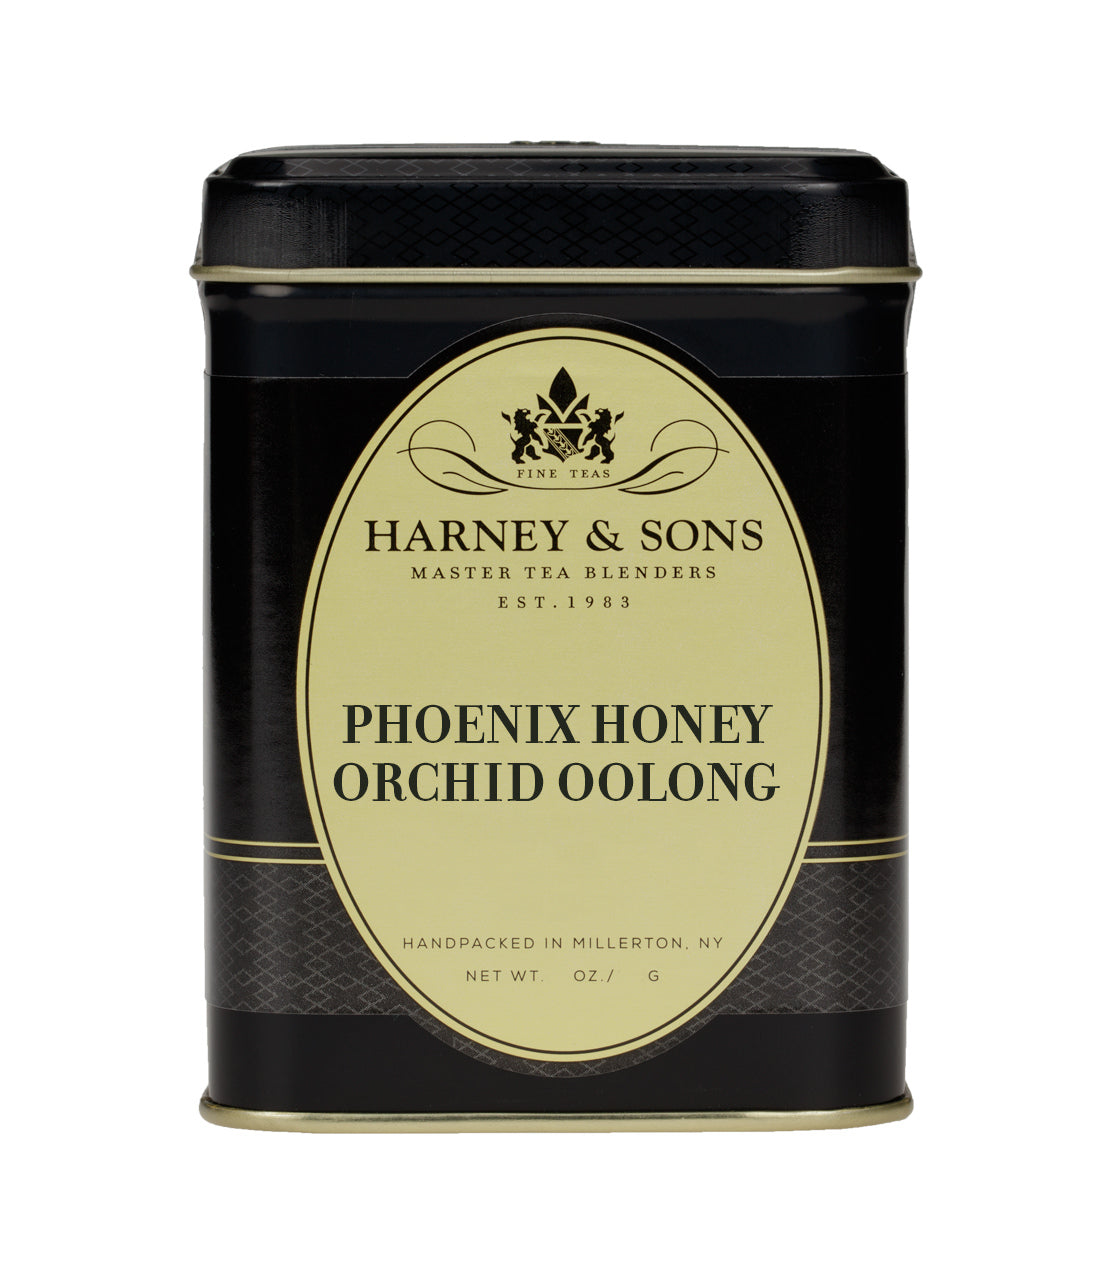 Phoenix Honey Orchid Oolong